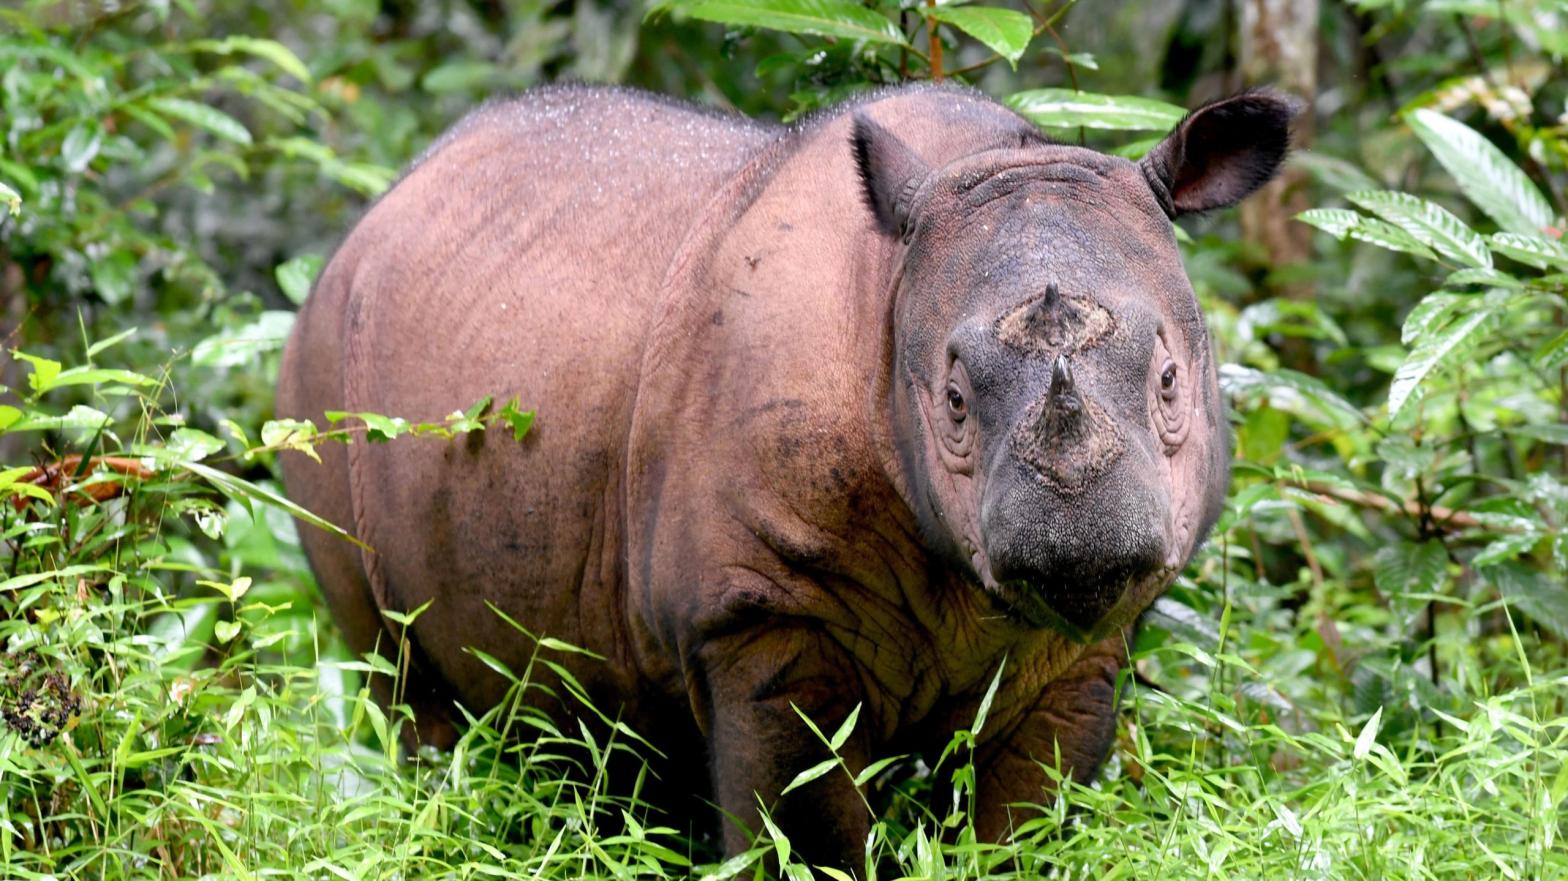 The Sumatran rhino is among the rarest mammals on Earth. (Photo: Getty)